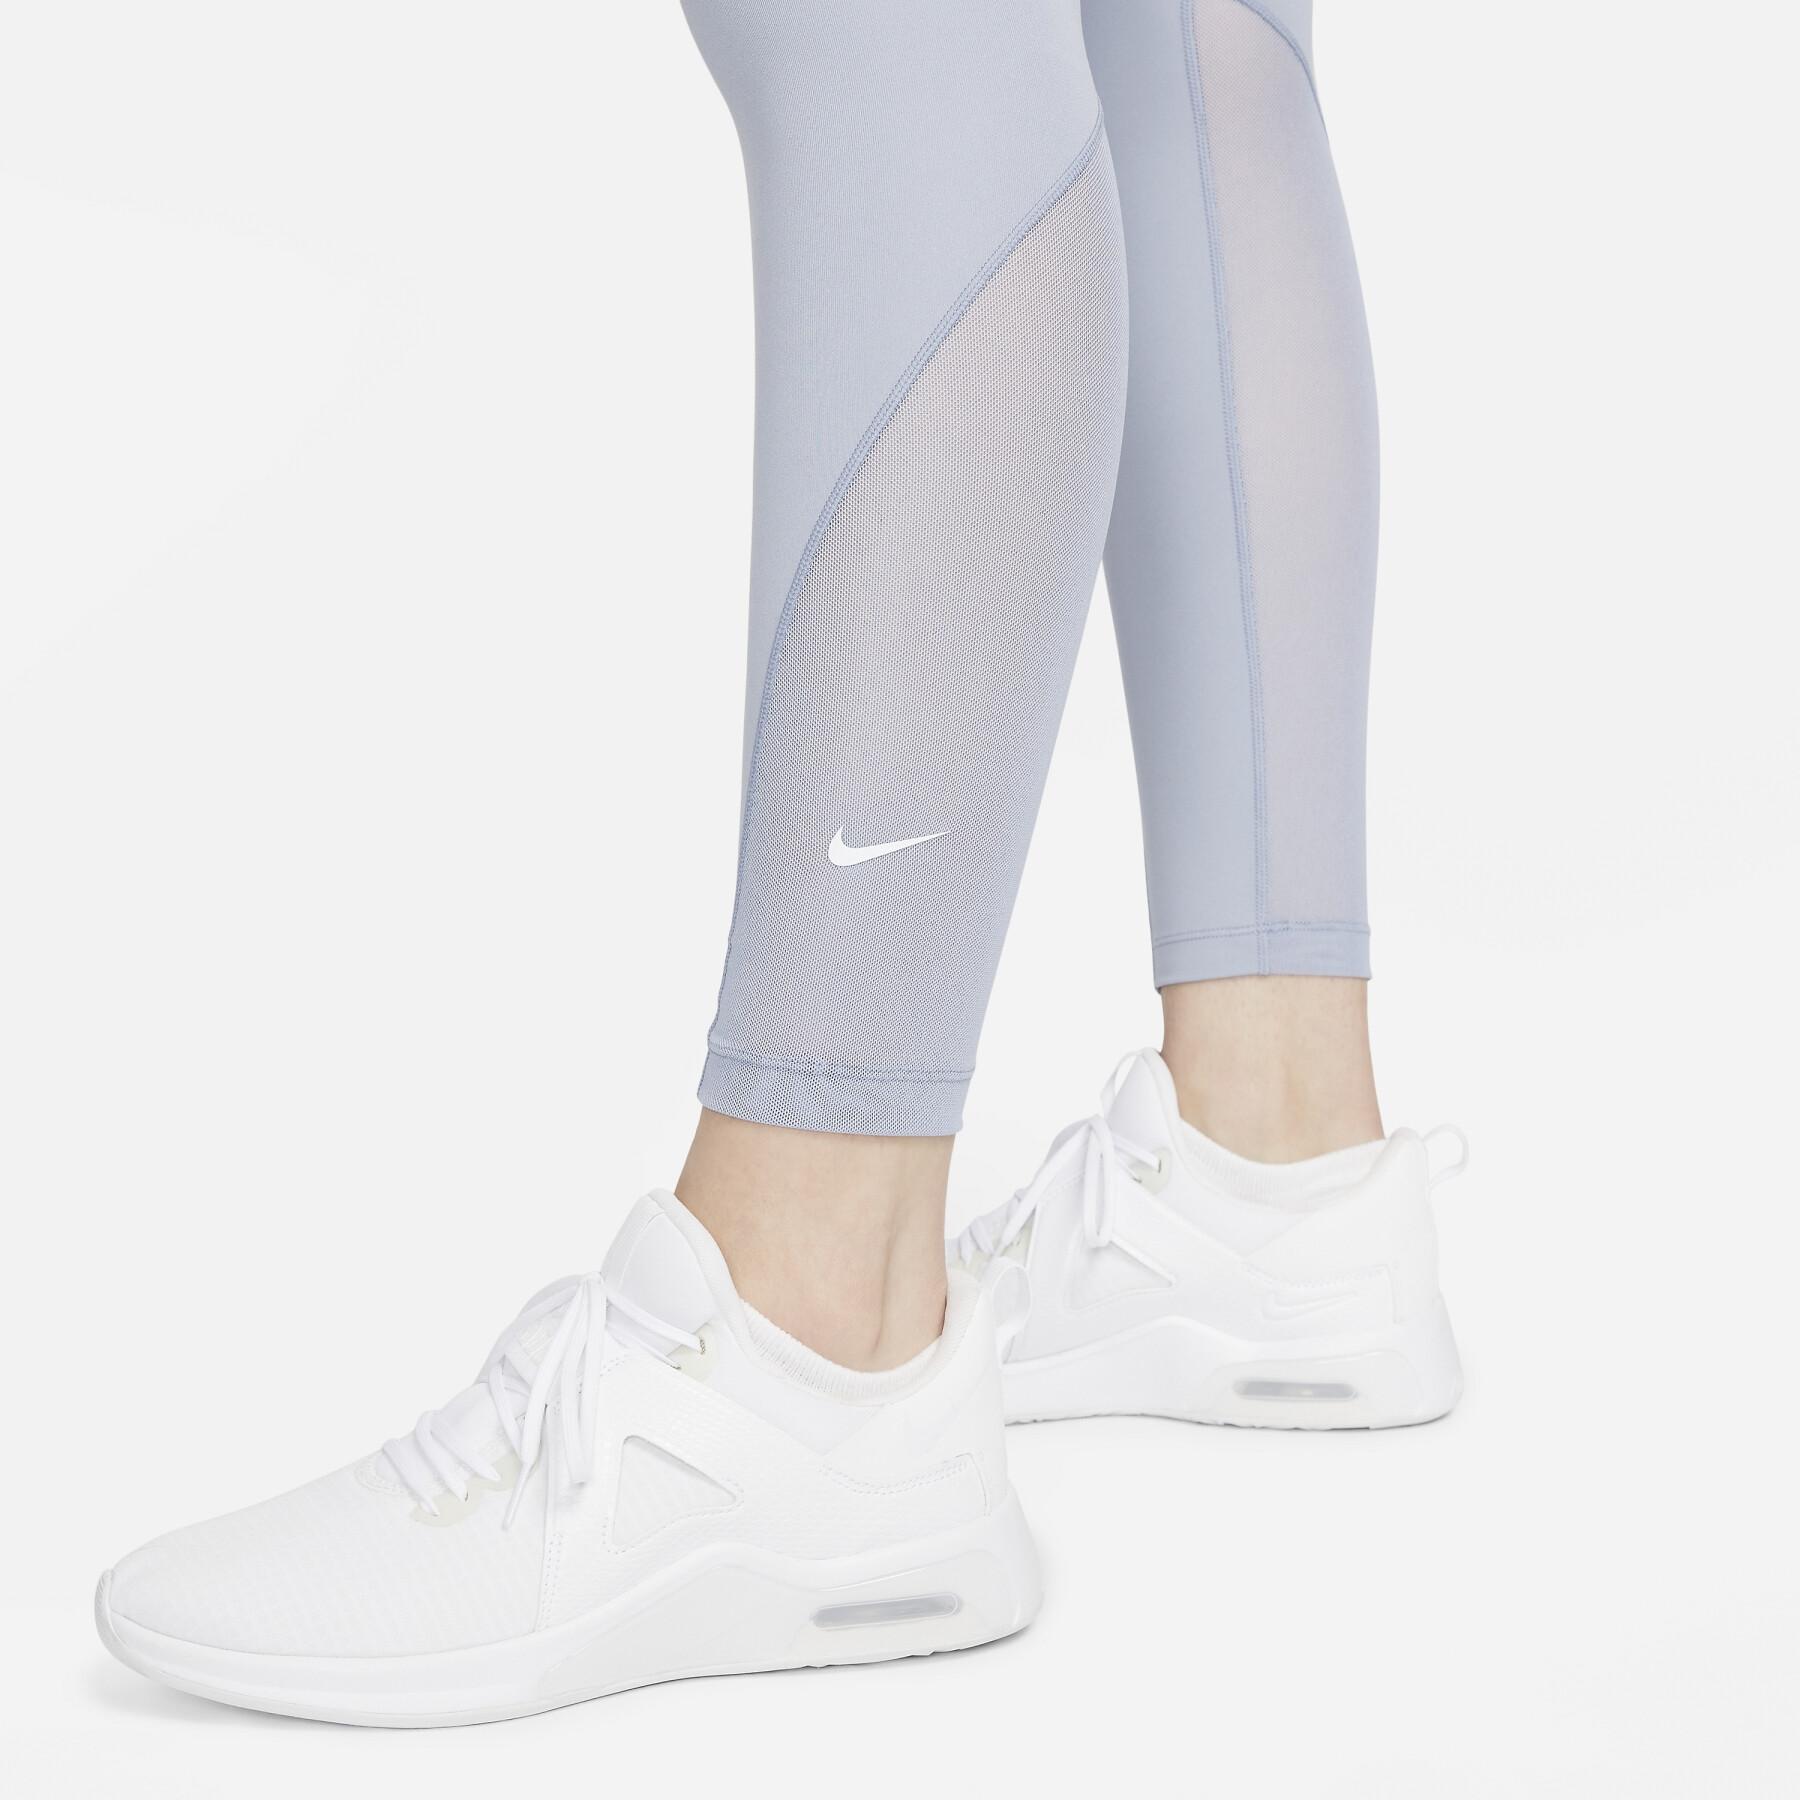 Legging 7/8 high waist woman Nike One Dri-FIT